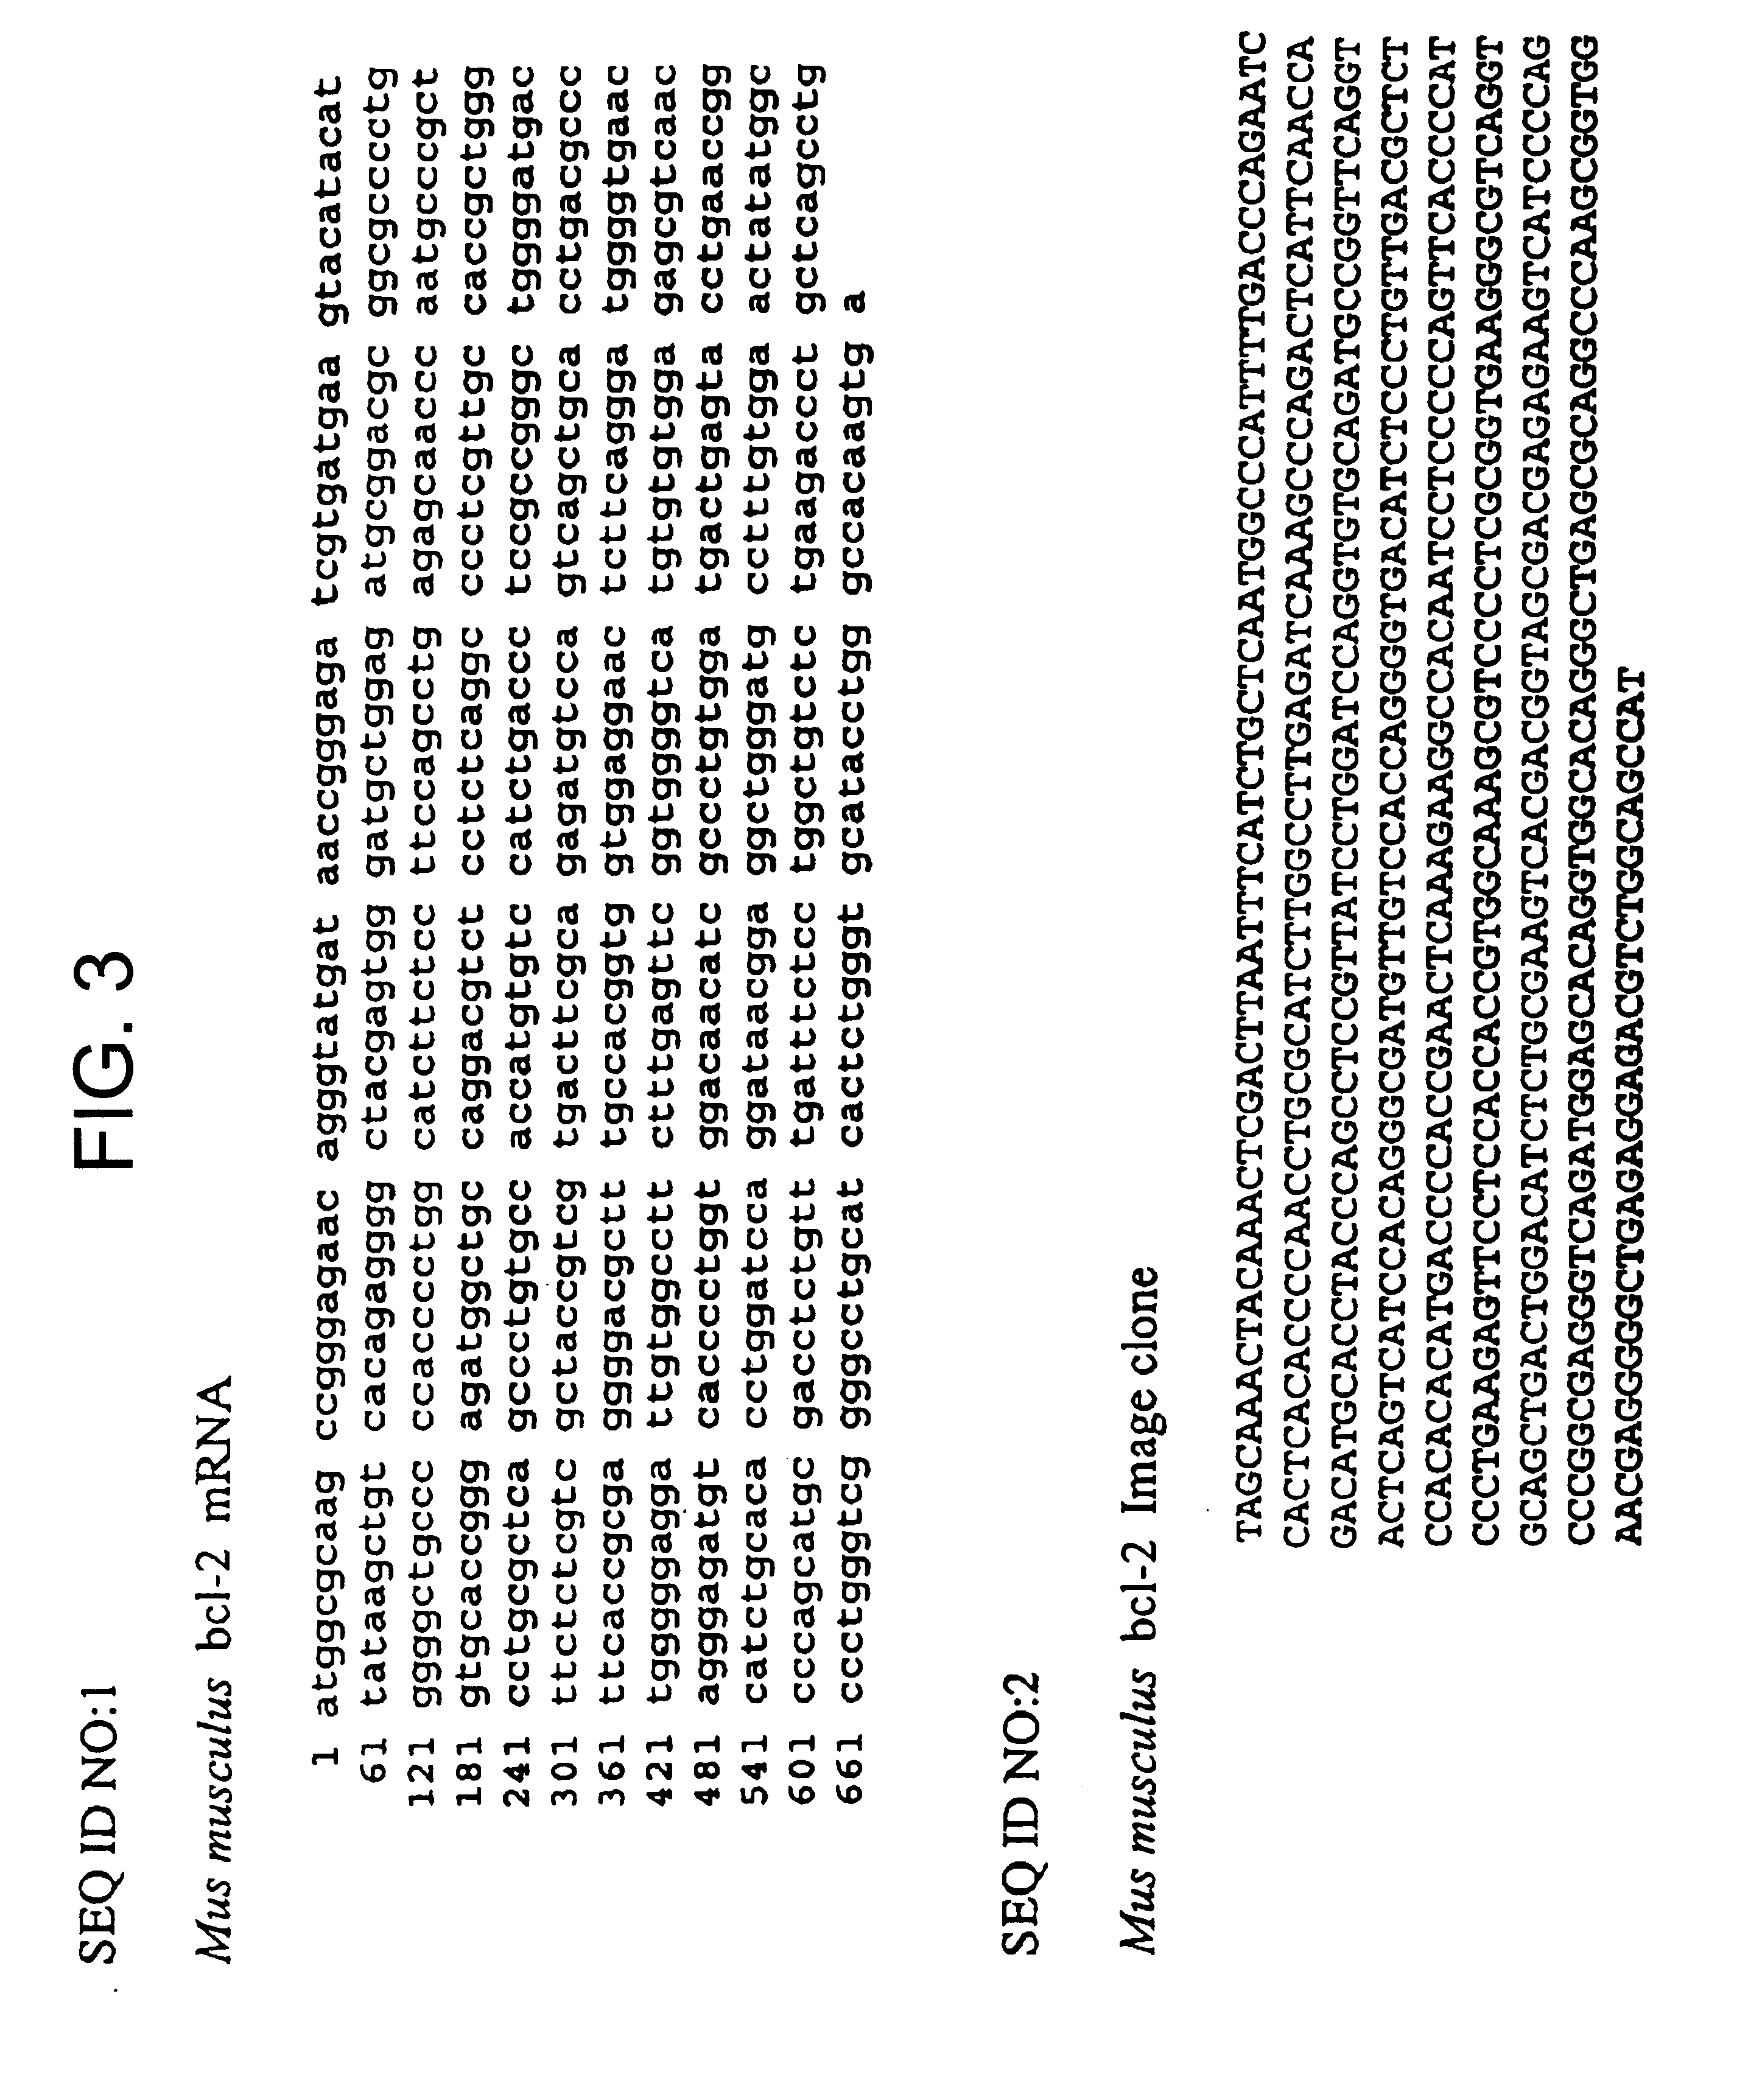 DNA array sequence selection